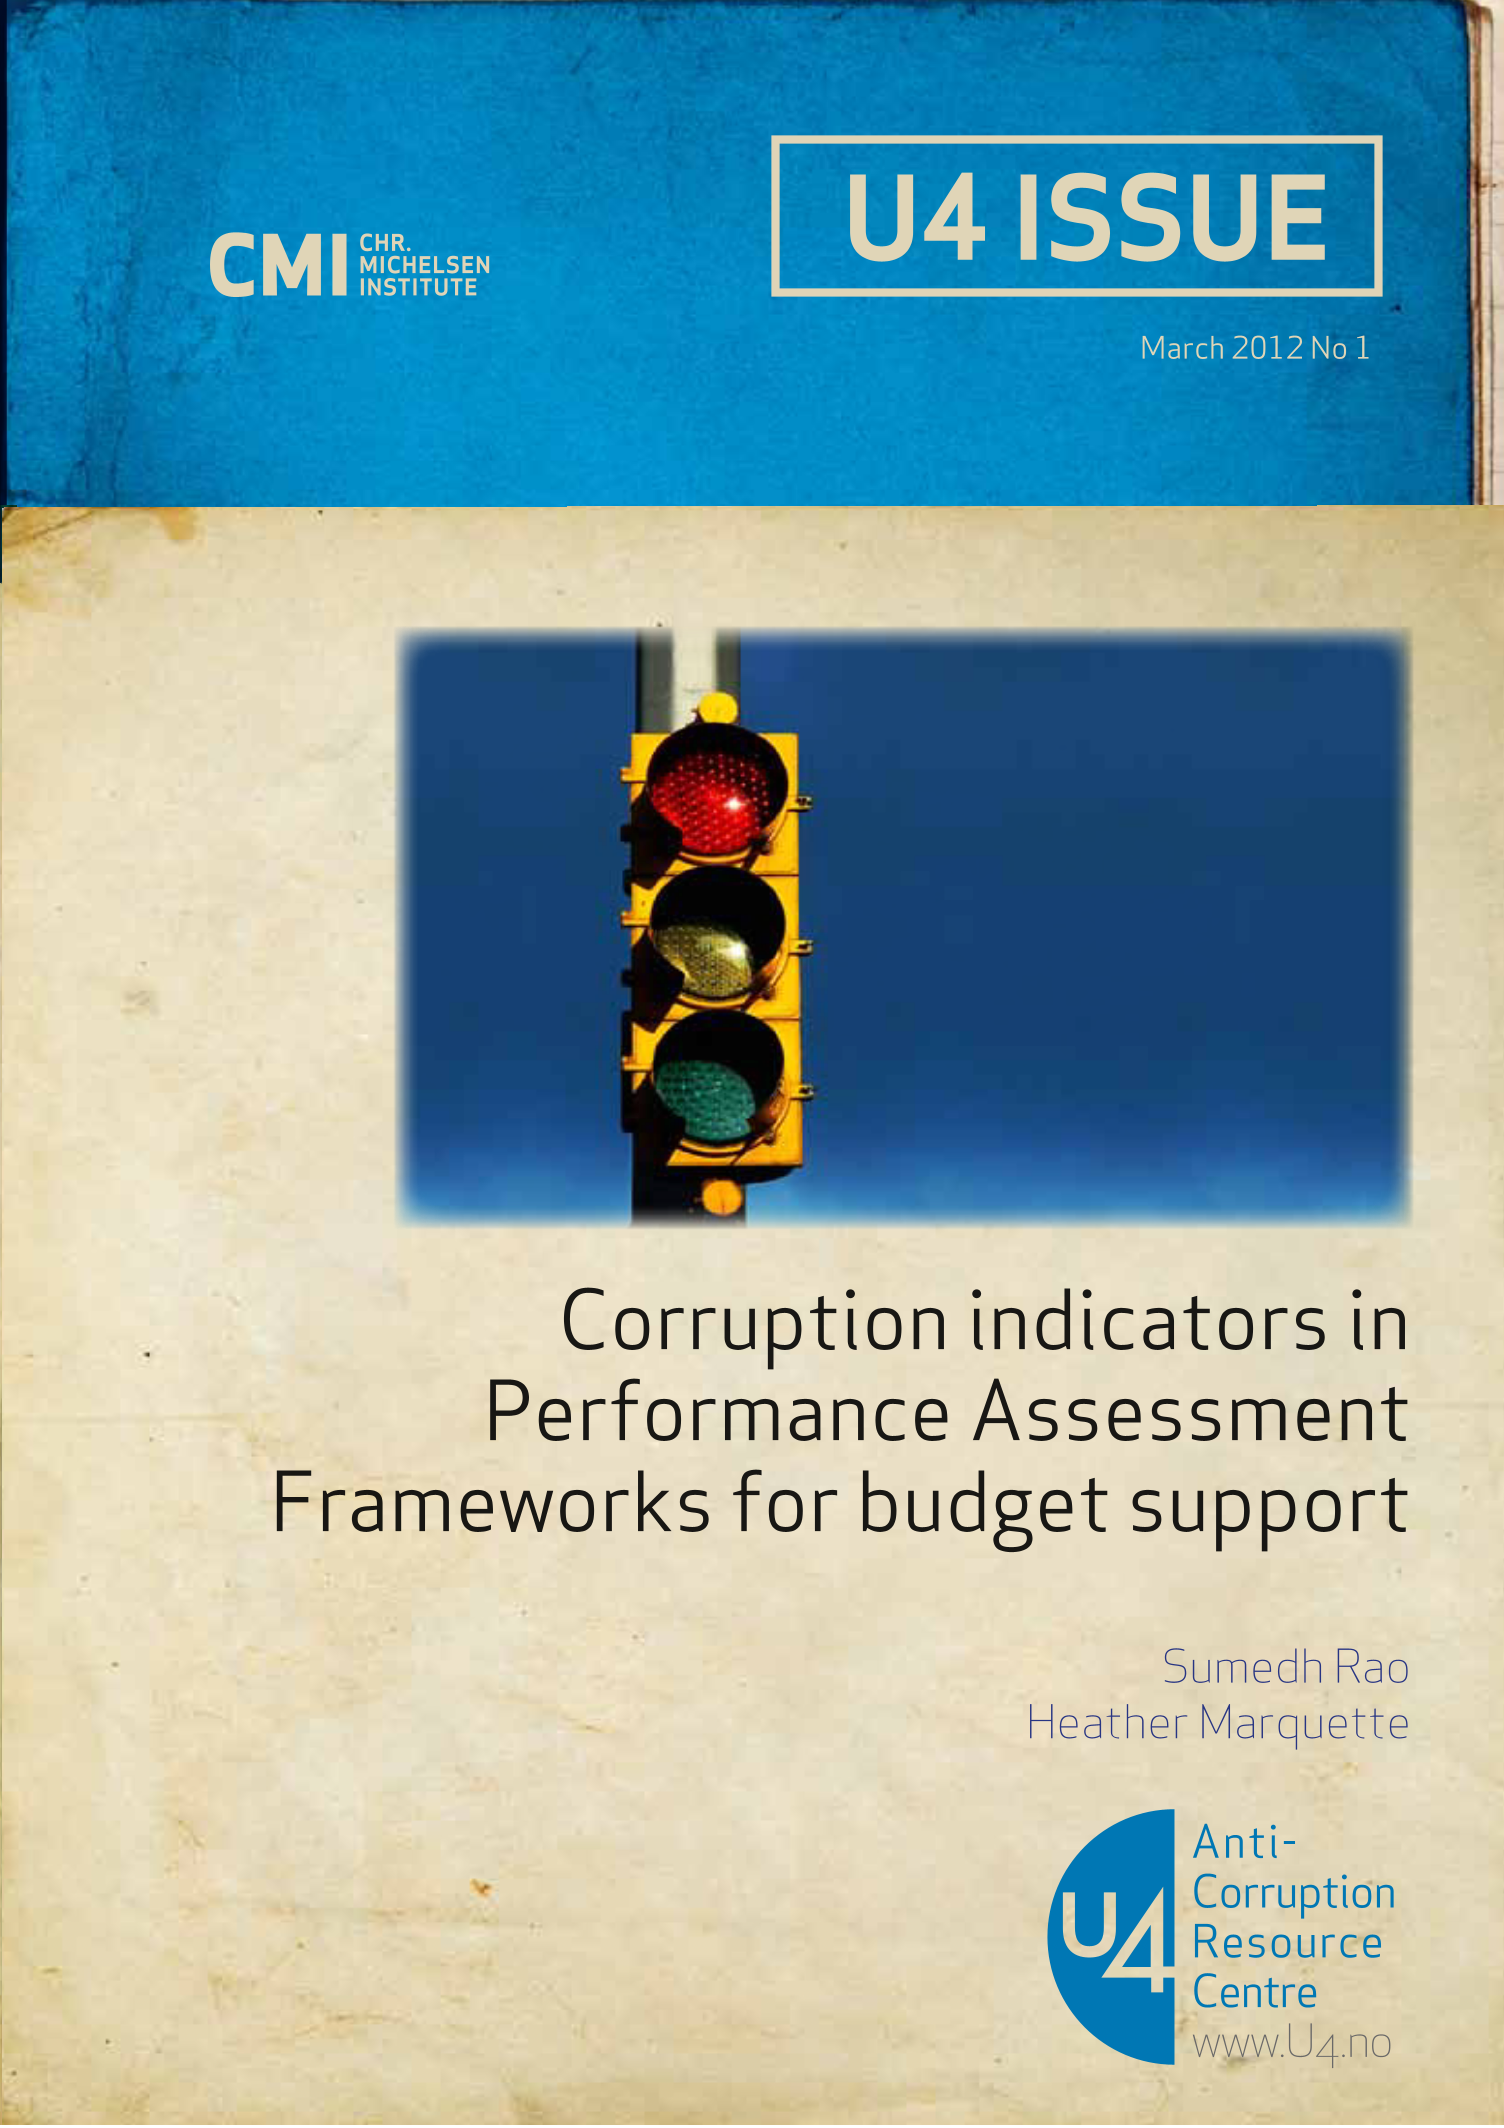 Corruption indicators in Performance Assessment Frameworks for budget support